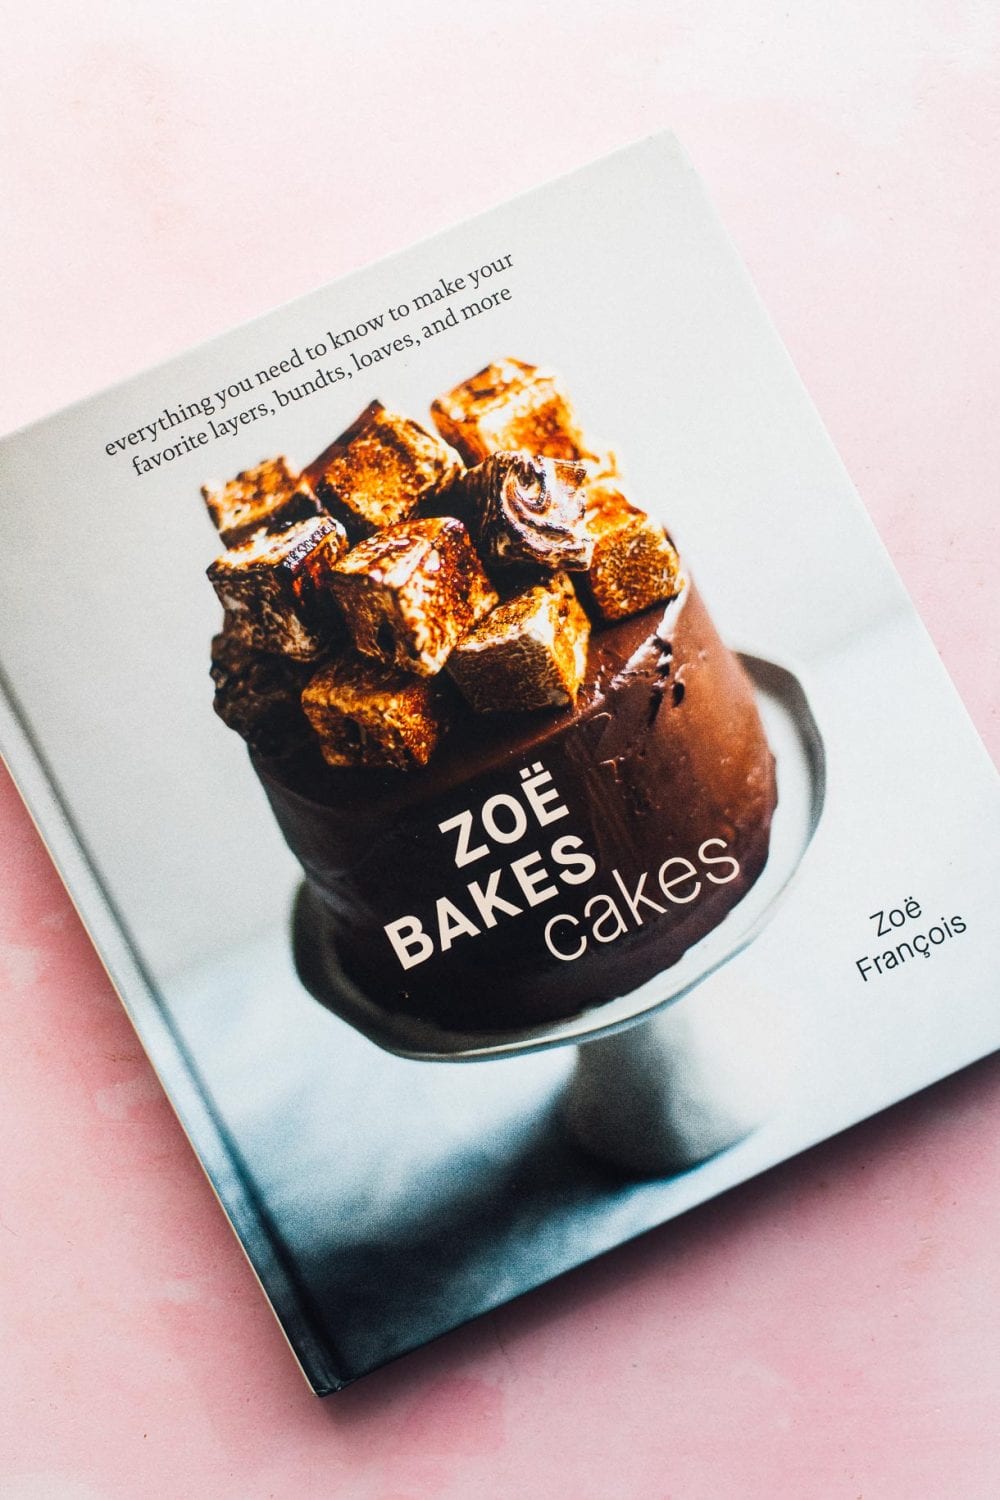 zoe bakes cake cookbook on pink background